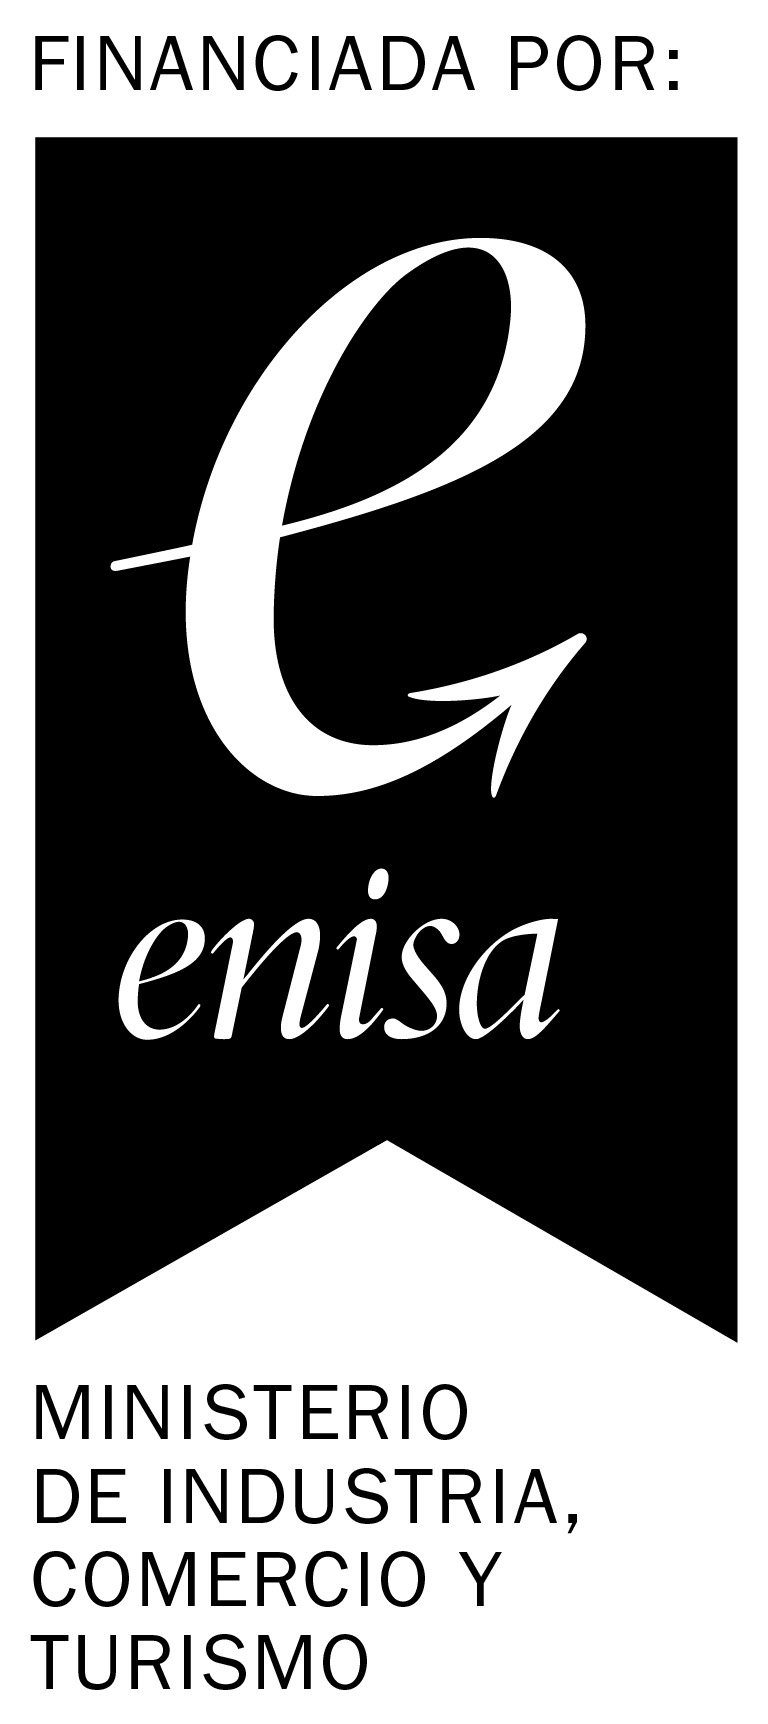 Logo ENISA